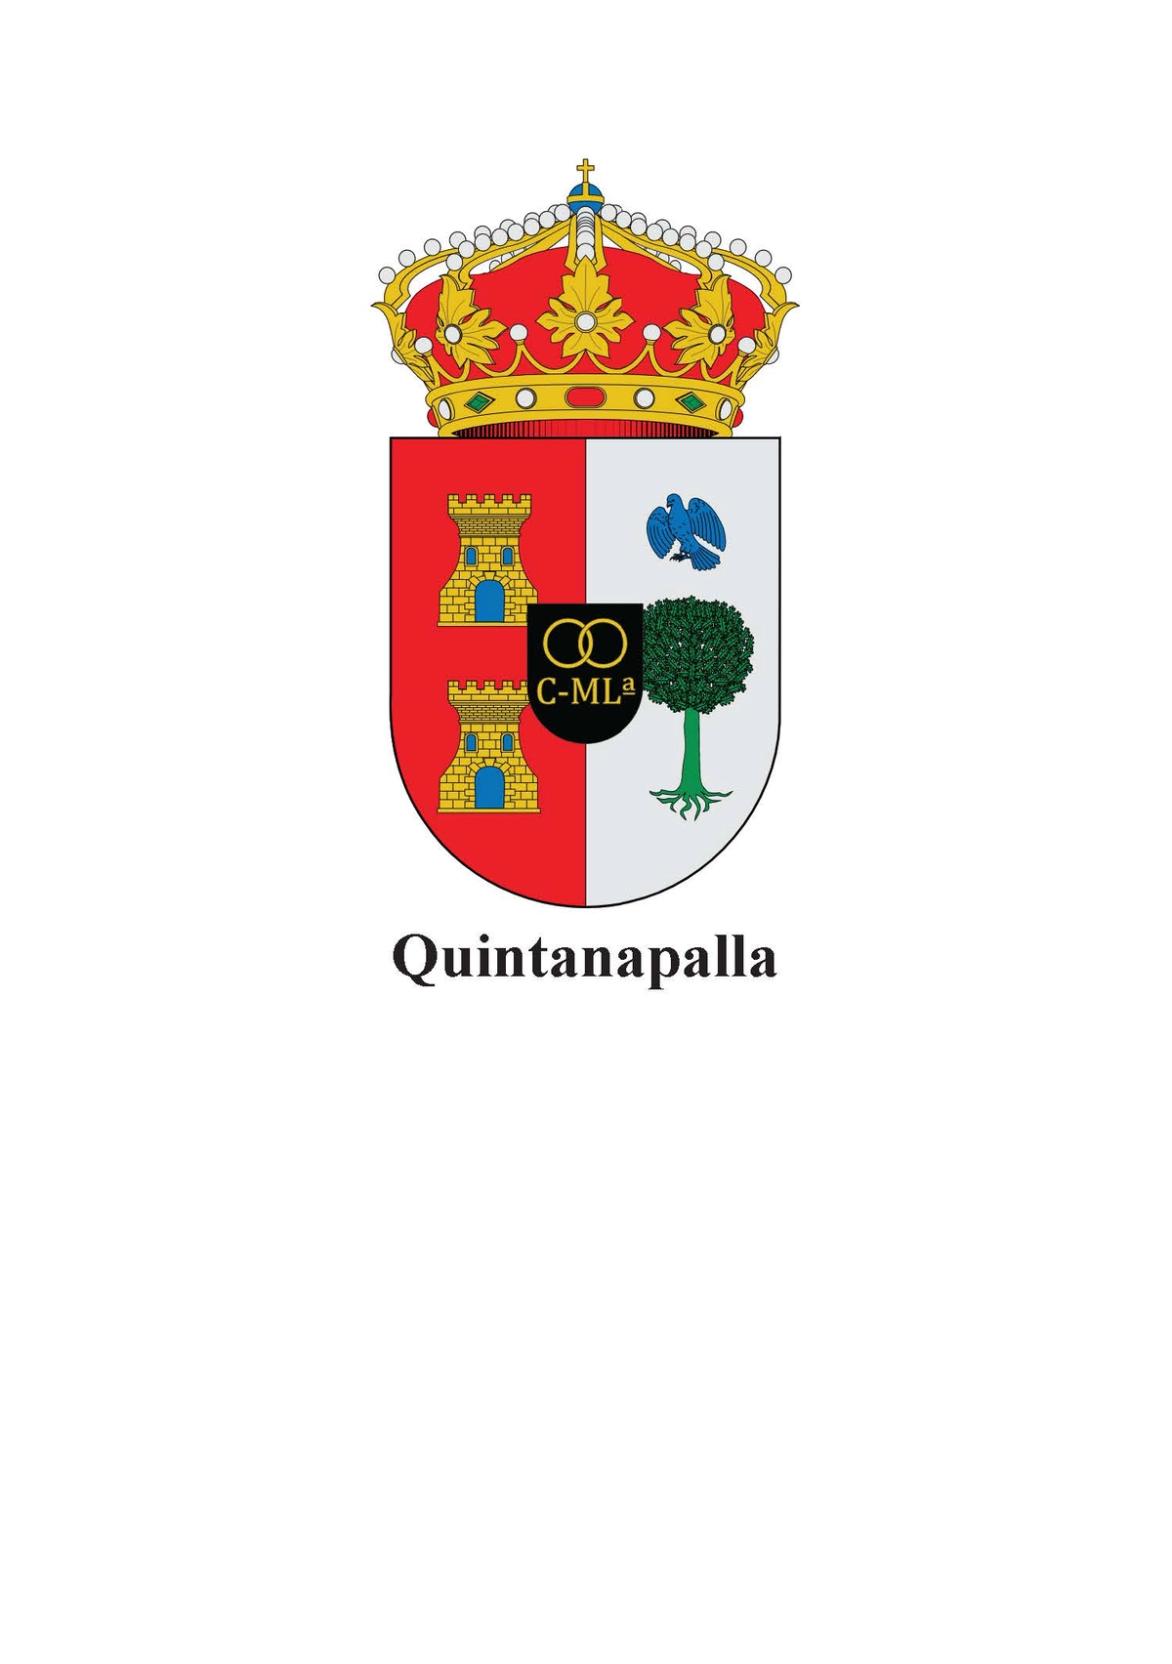 Quintanapalla City Council